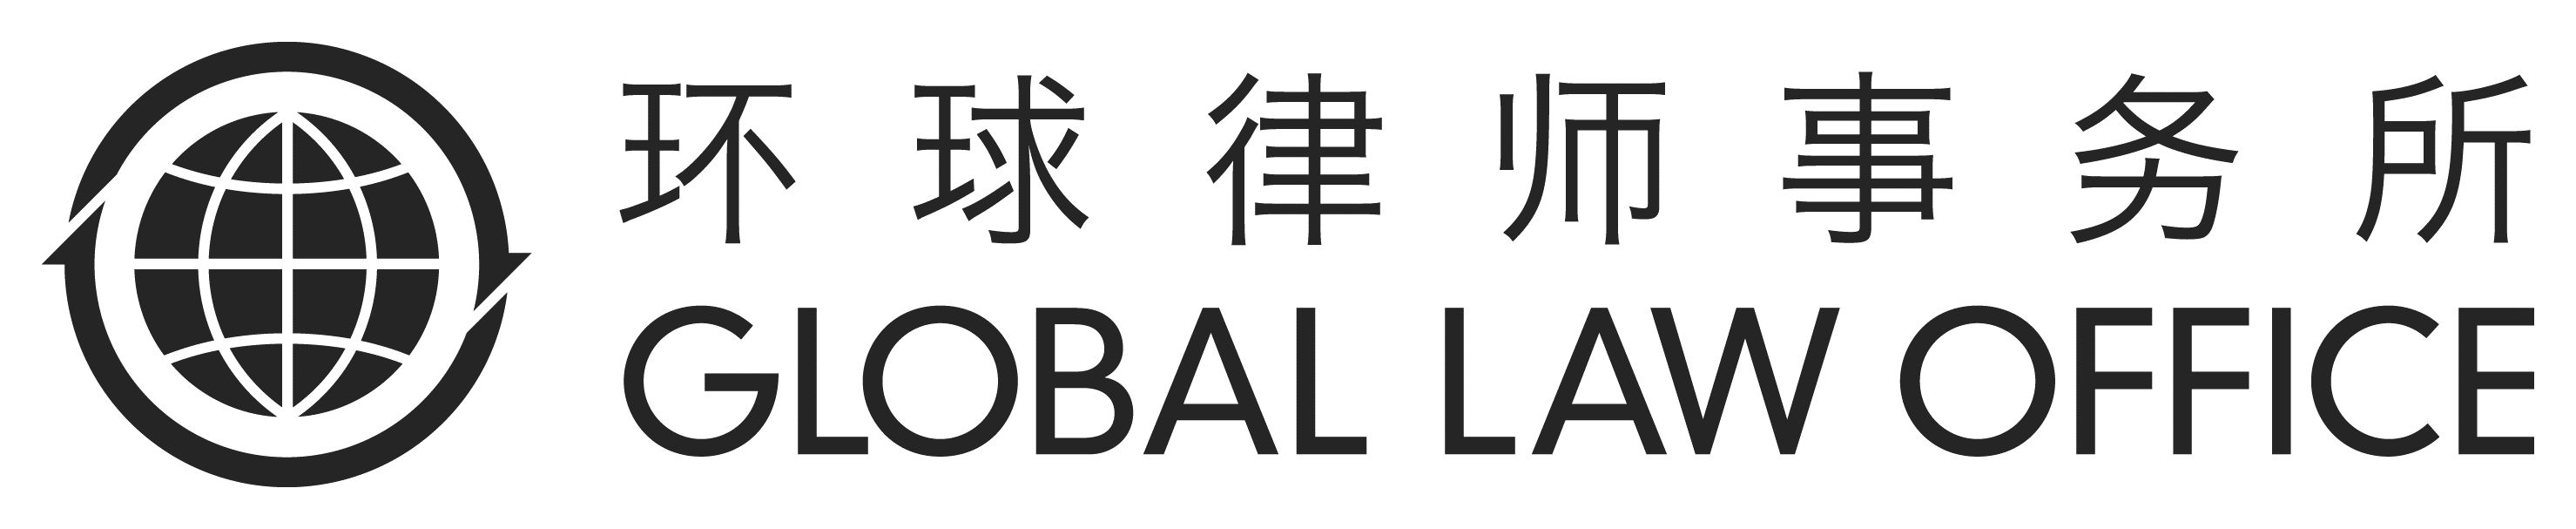 Global Law Office